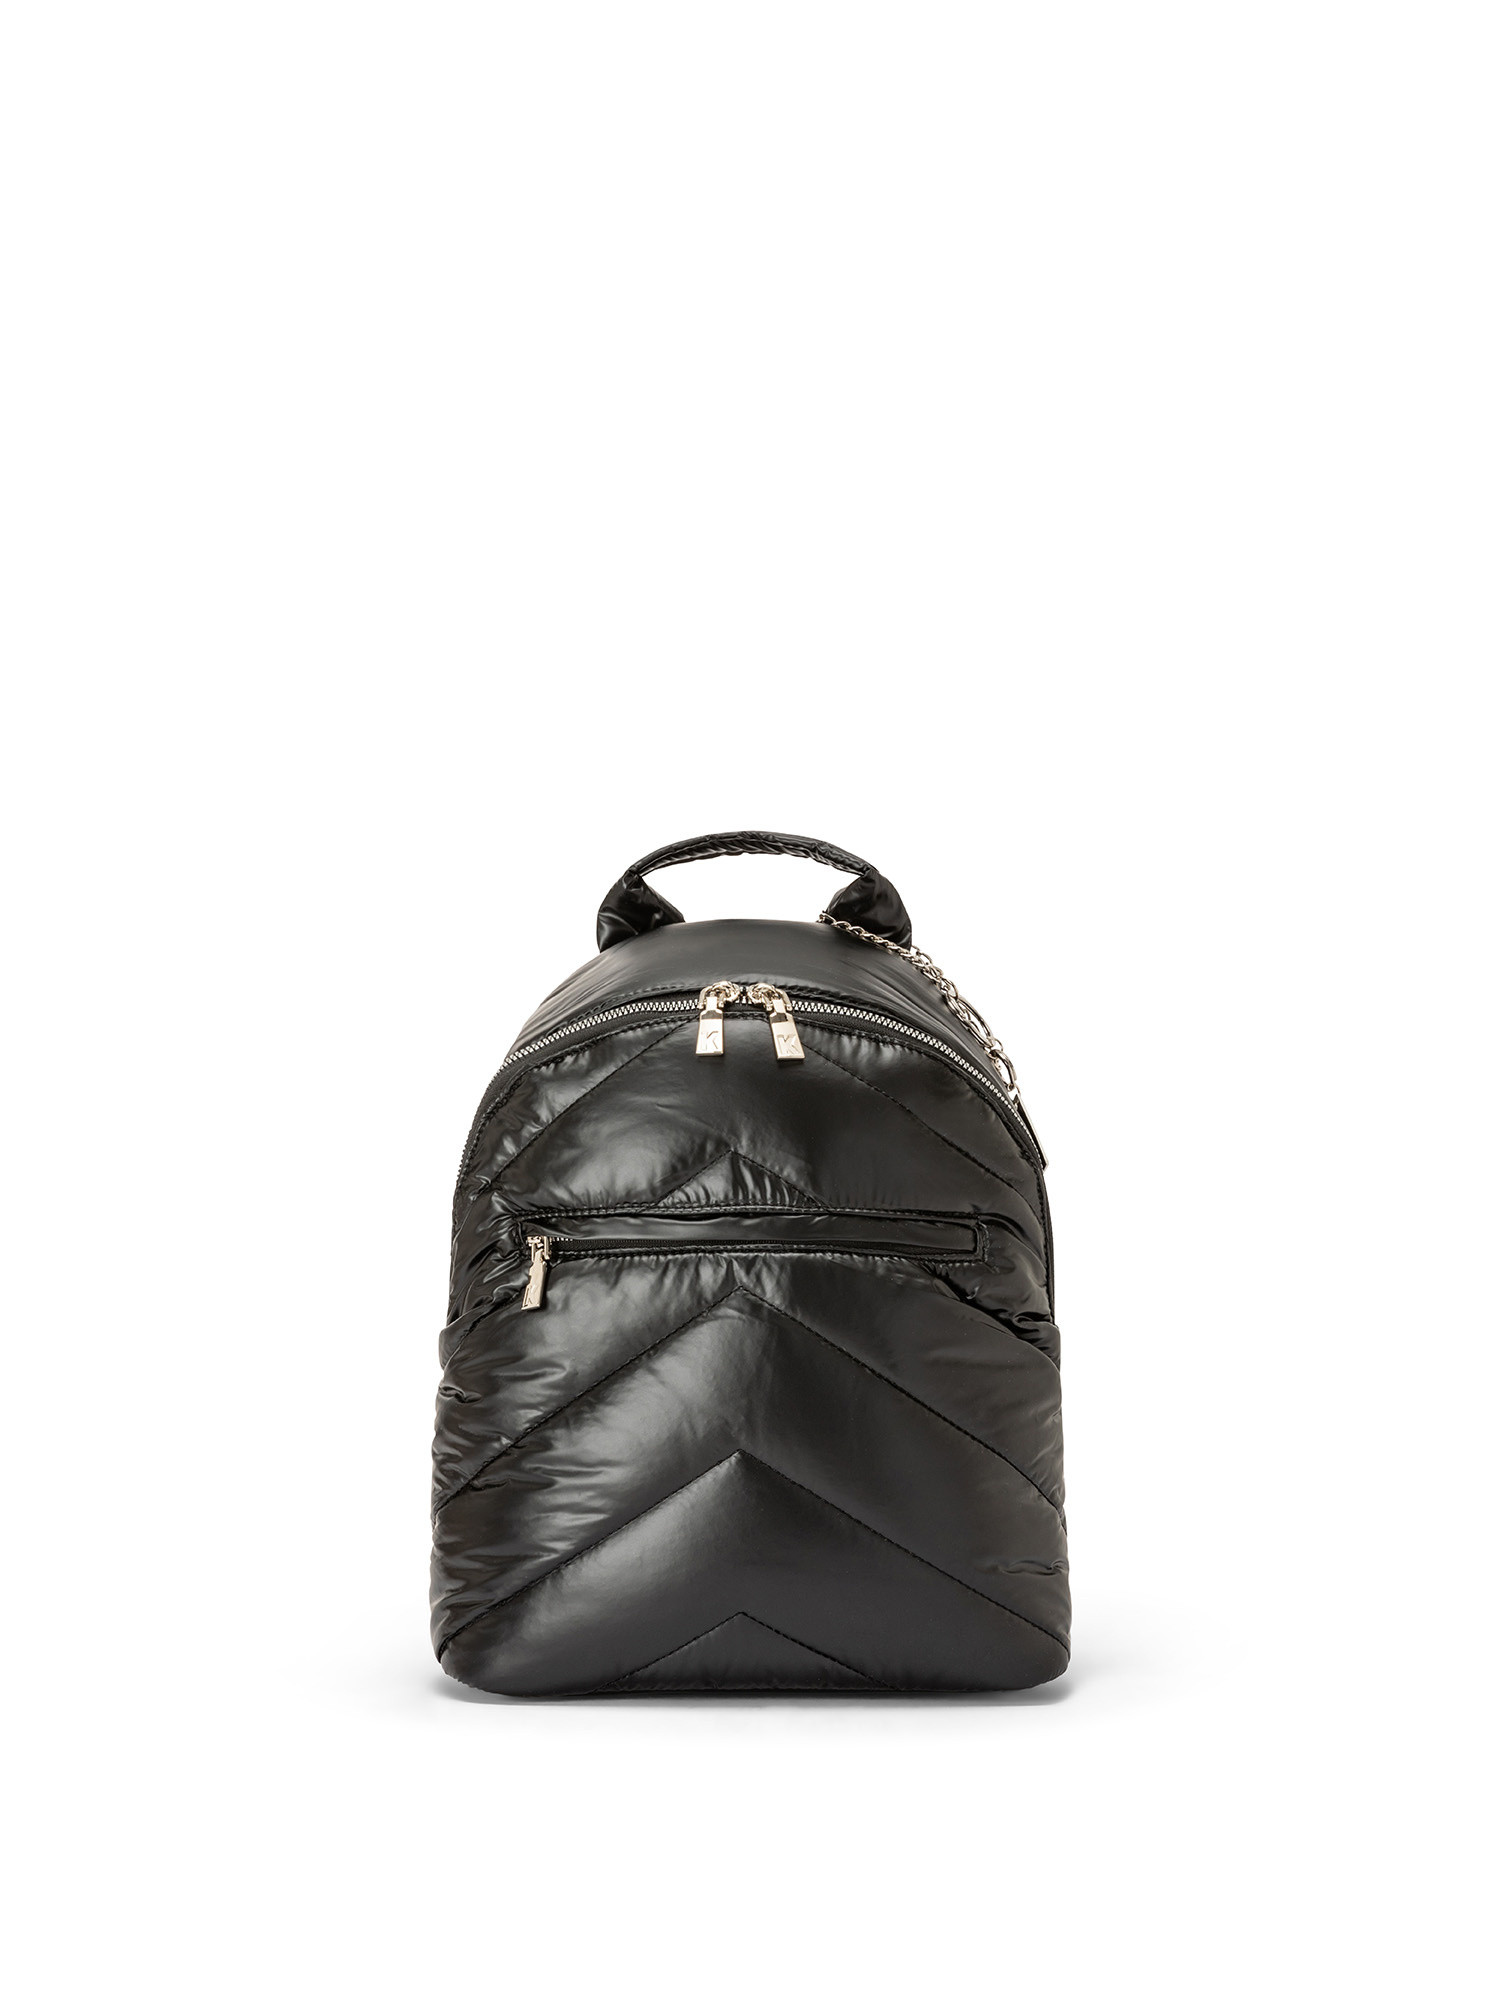 Koan - Nylon backpack, Black, large image number 0